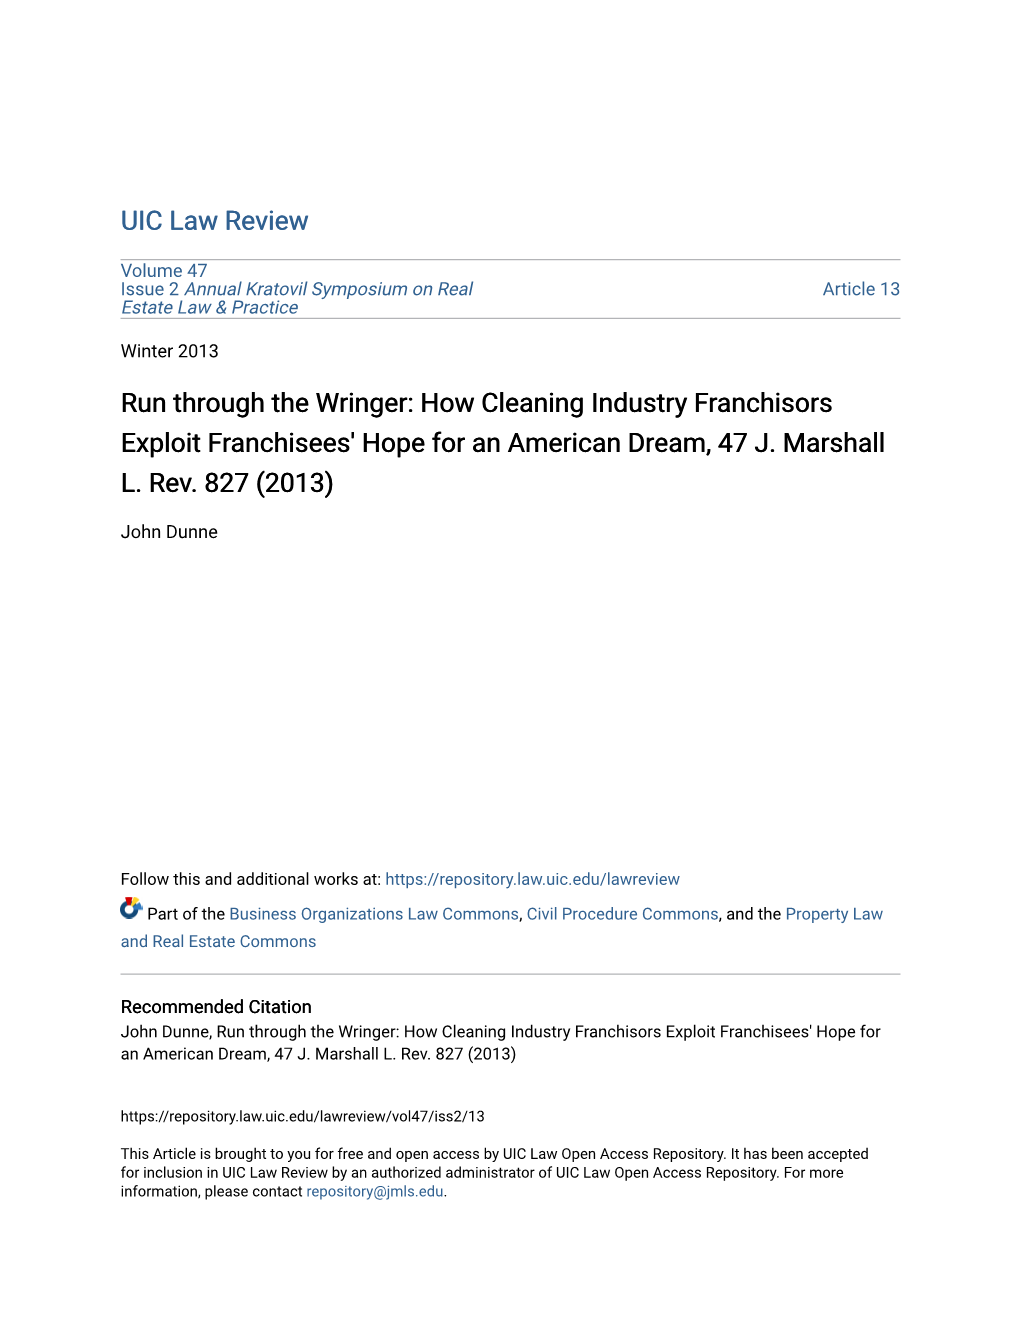 Run Through the Wringer: How Cleaning Industry Franchisors Exploit Franchisees' Hope for an American Dream, 47 J. Marshall L